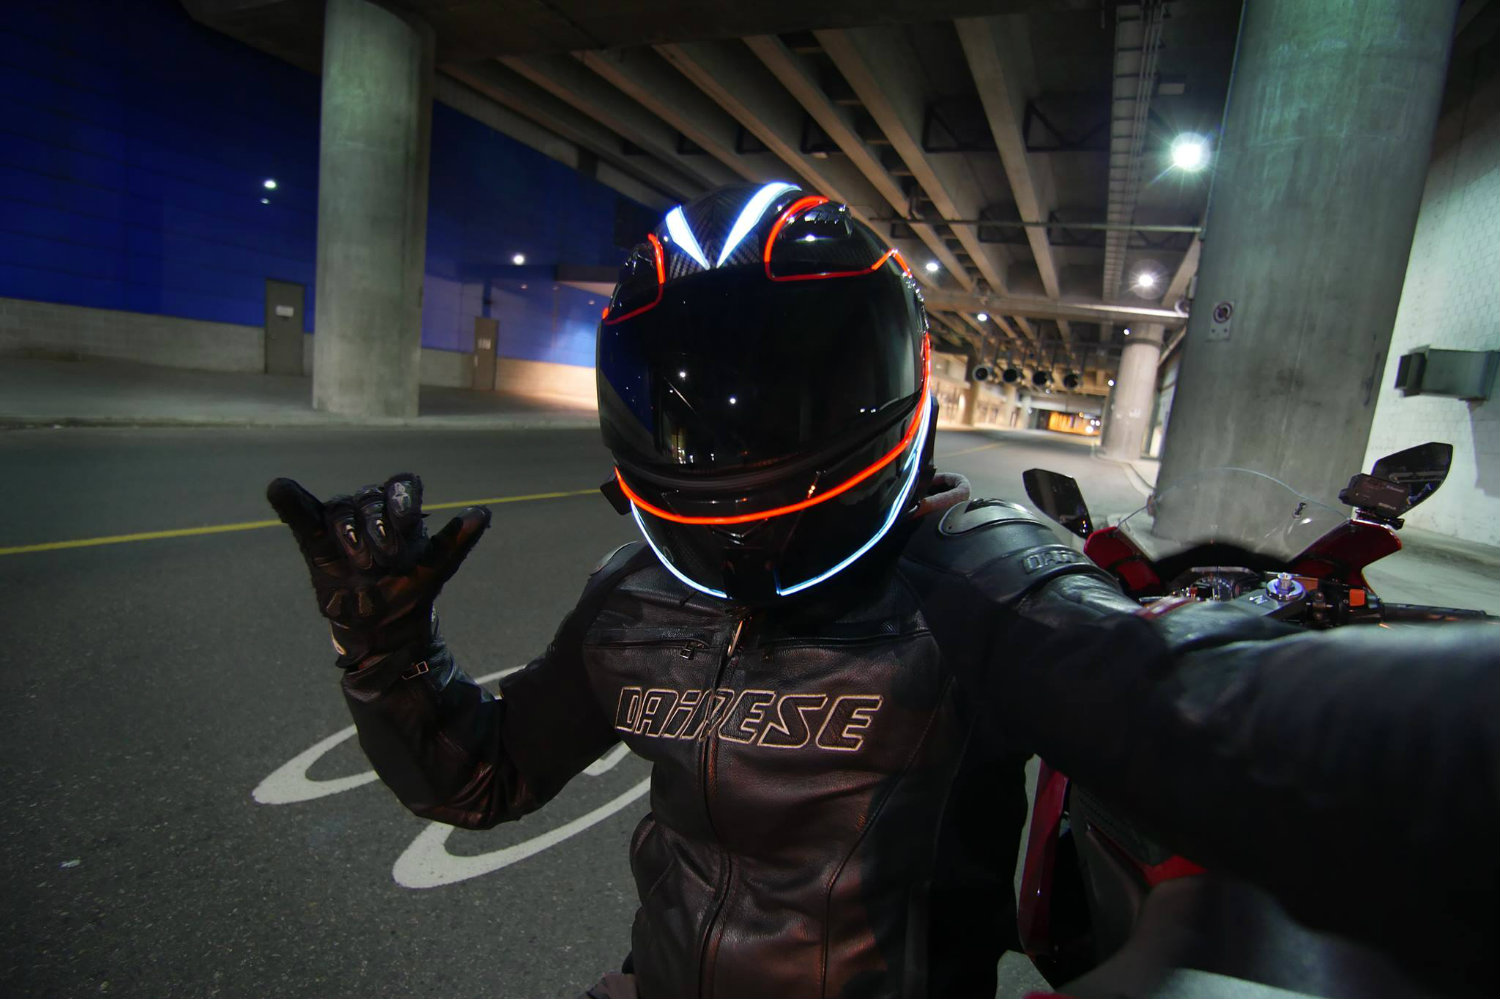 lightmode helmet light kits worn wicked selfie